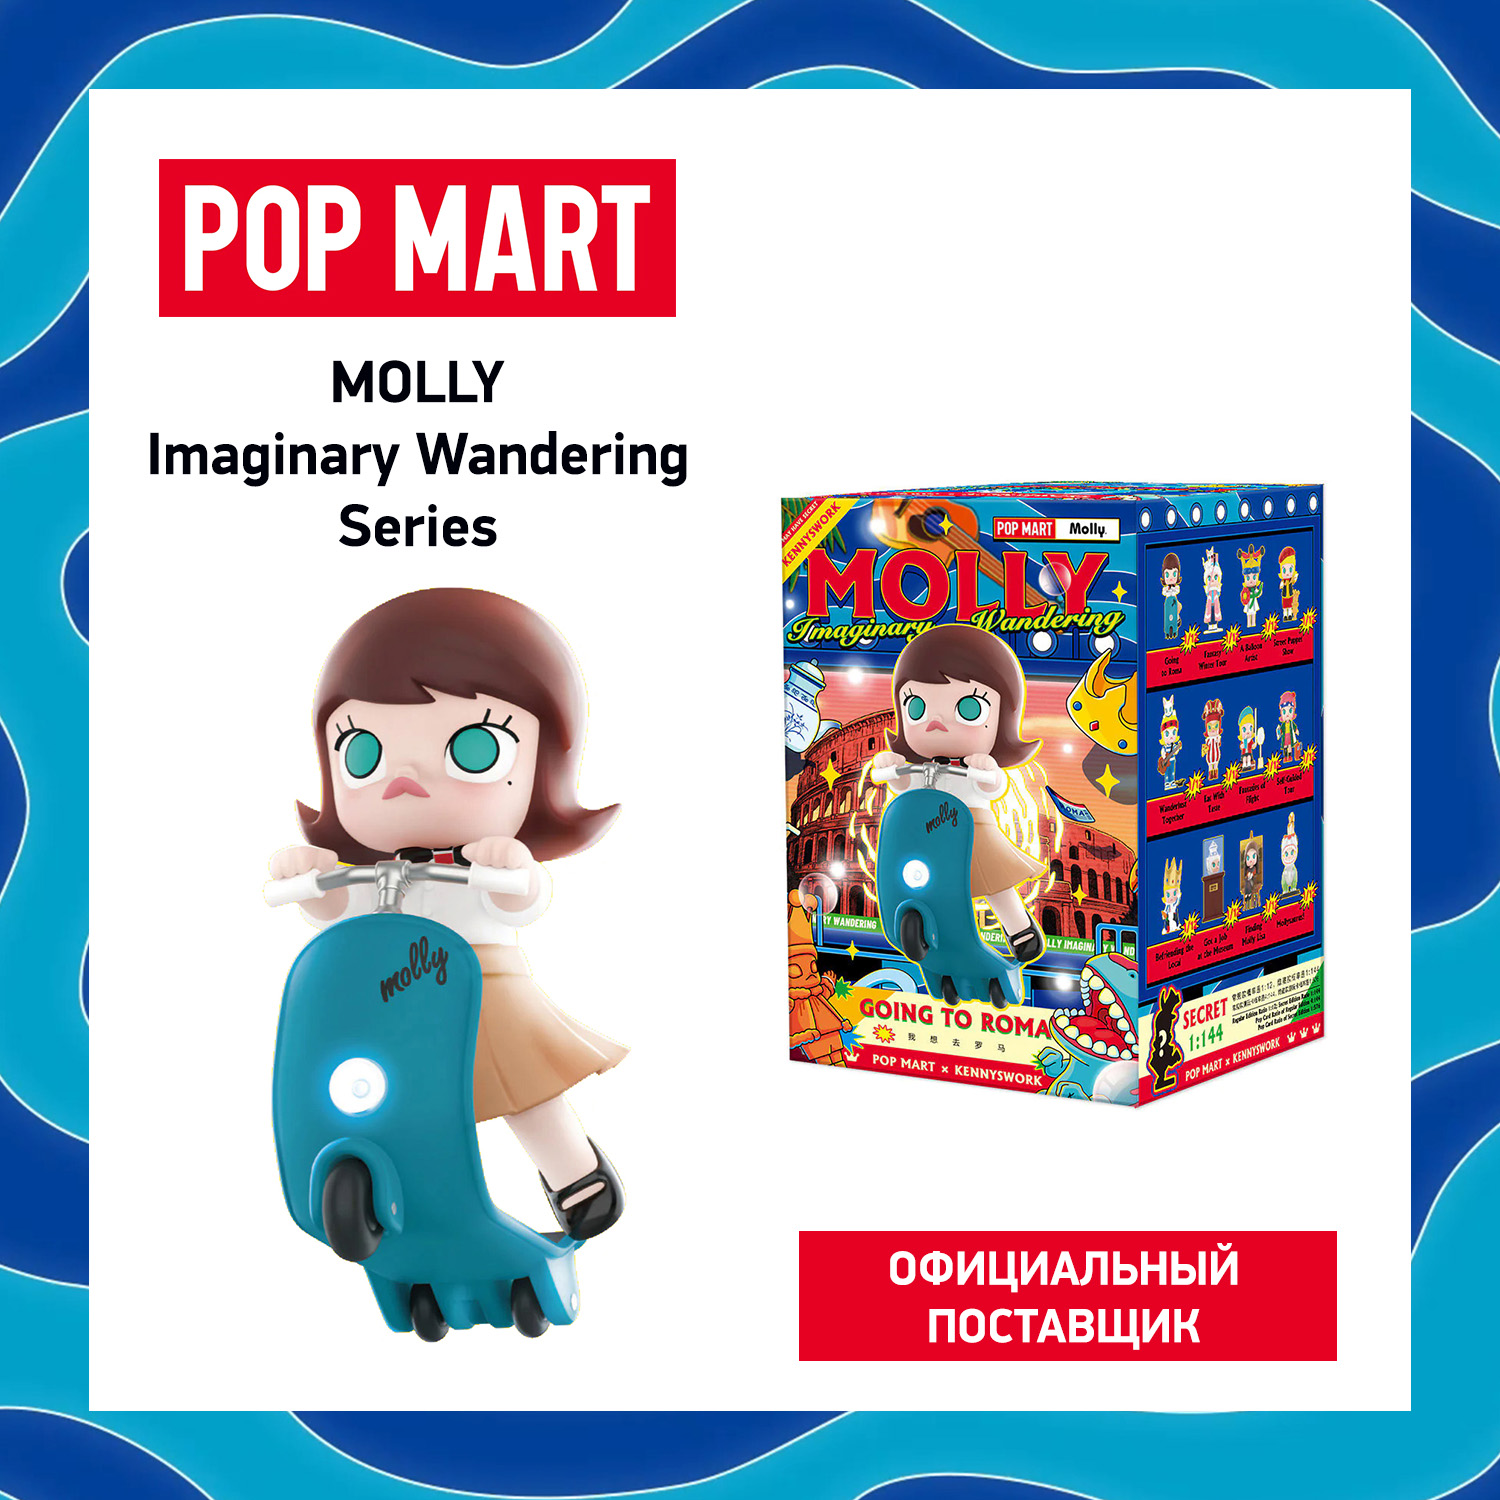 Коллекционная фигурка Pop Mart Molly Imaginary Wandering коллекционная фигурка pop mart duckyo friends wage earner